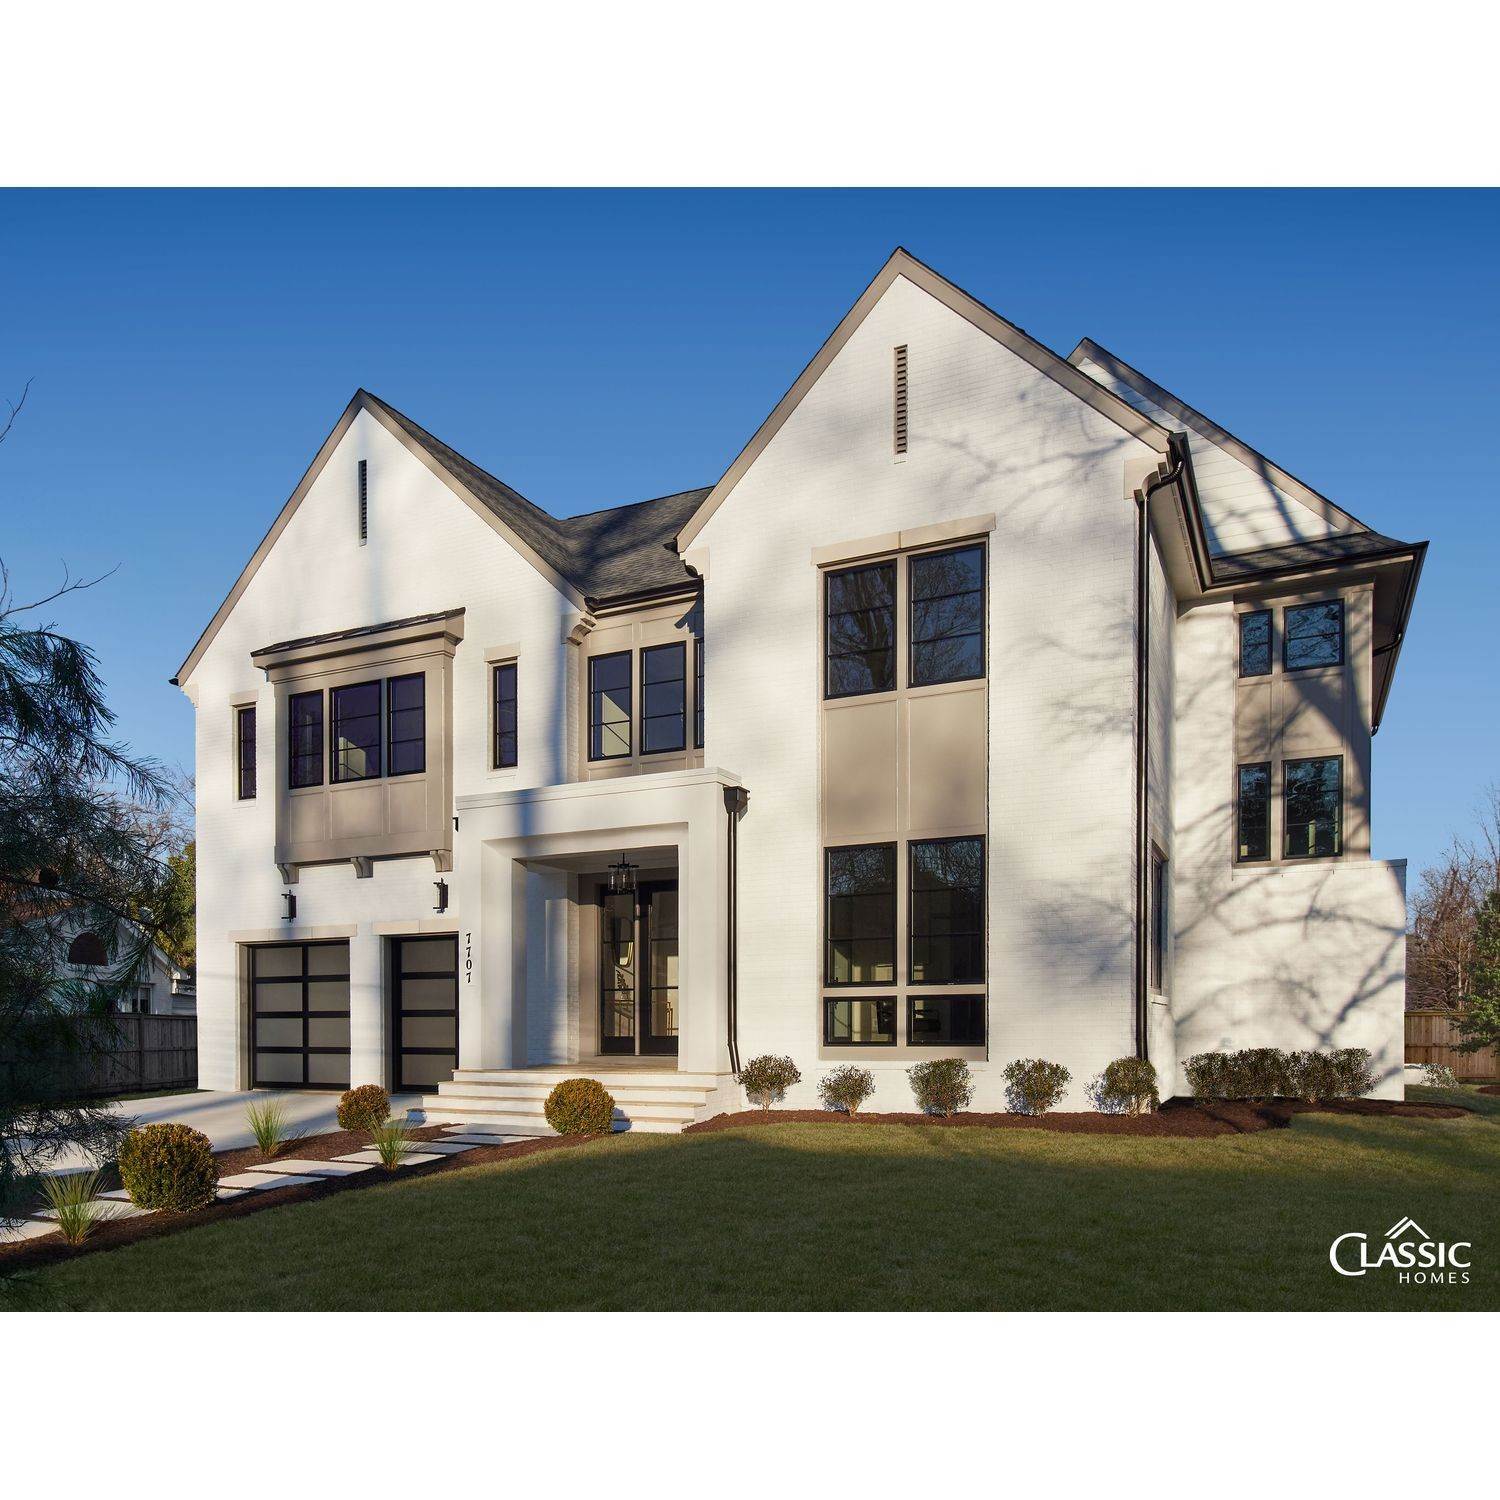 12. Classic Homes of Maryland - Custom Home Builder (Bethesda) edificio en Bethesda, MD 20817